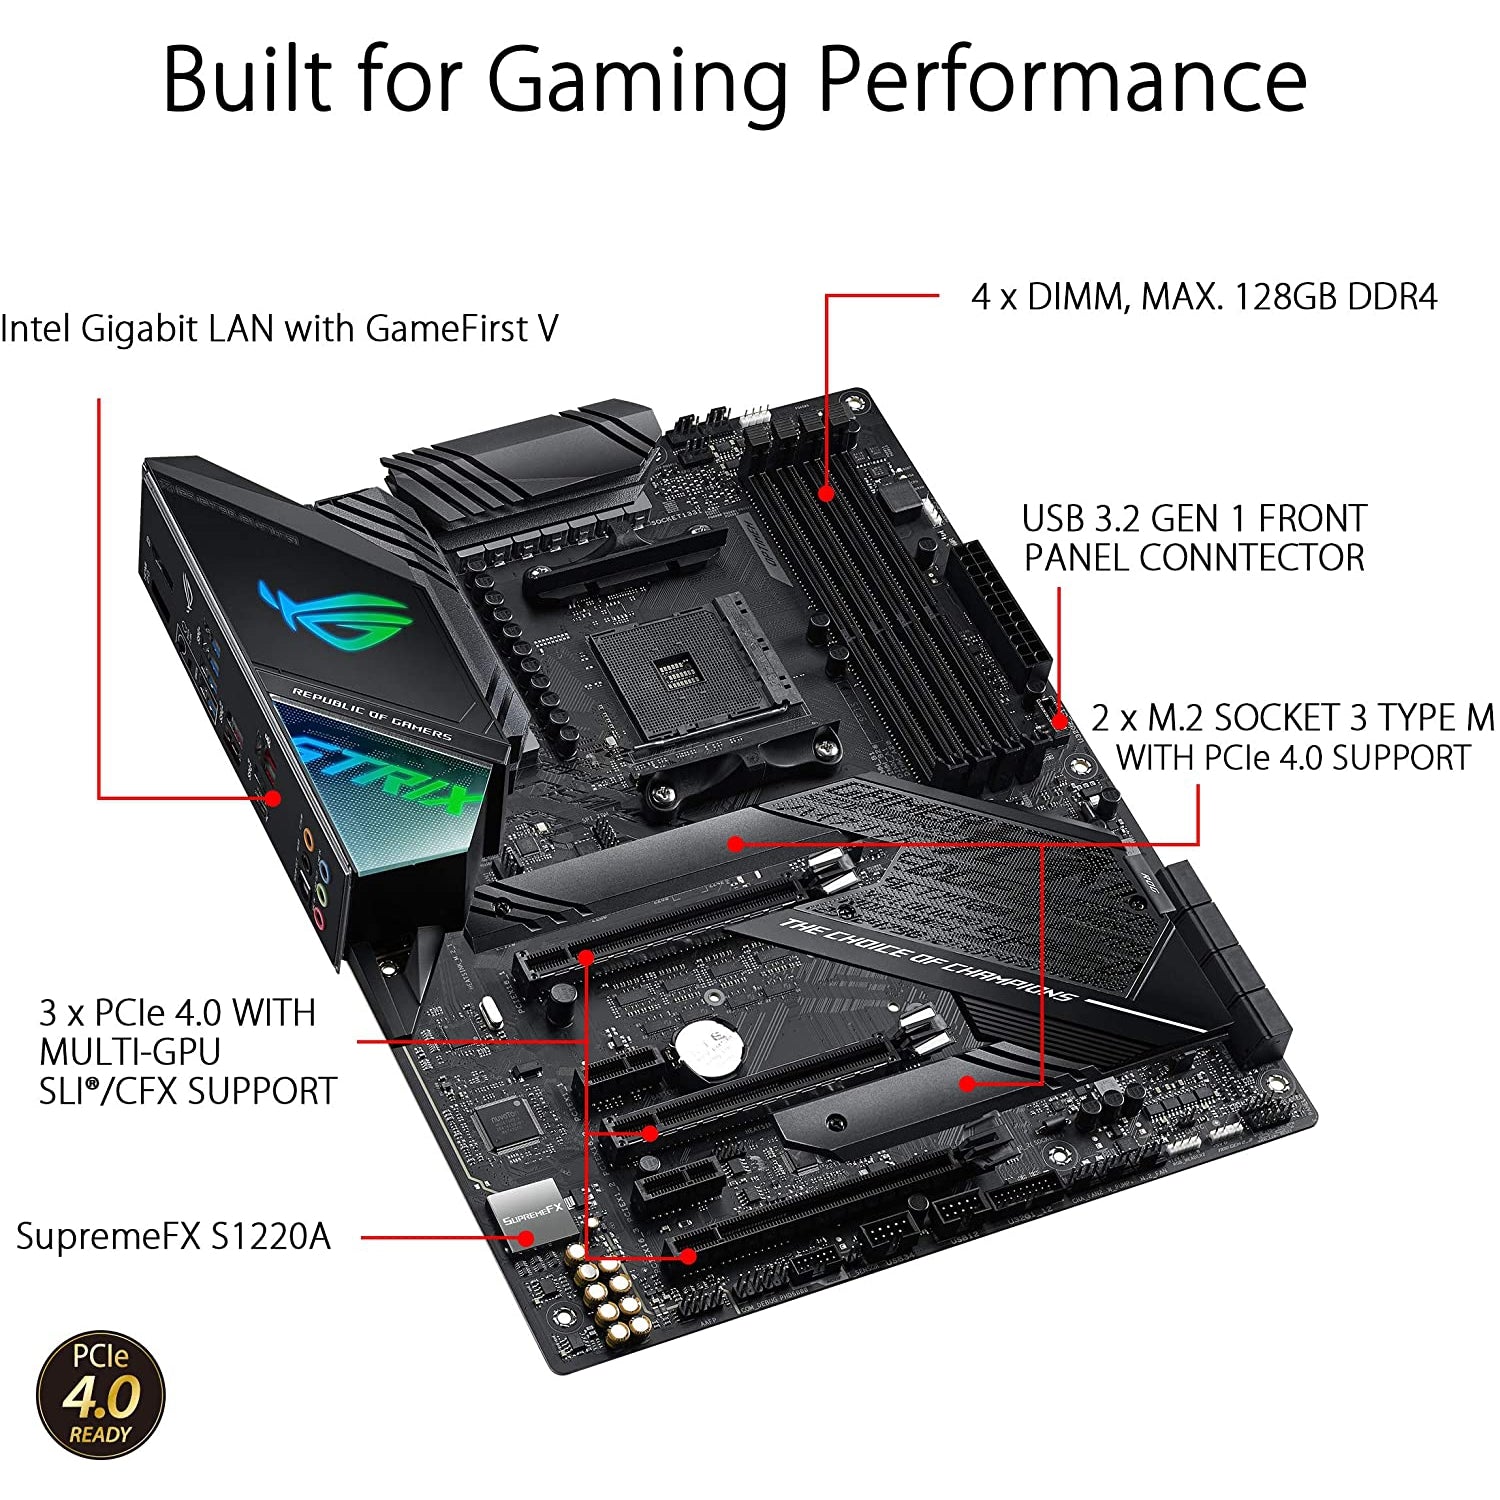 ASUS ROG Strix X570-F Gaming, AMD AM4, ATX Motherboard